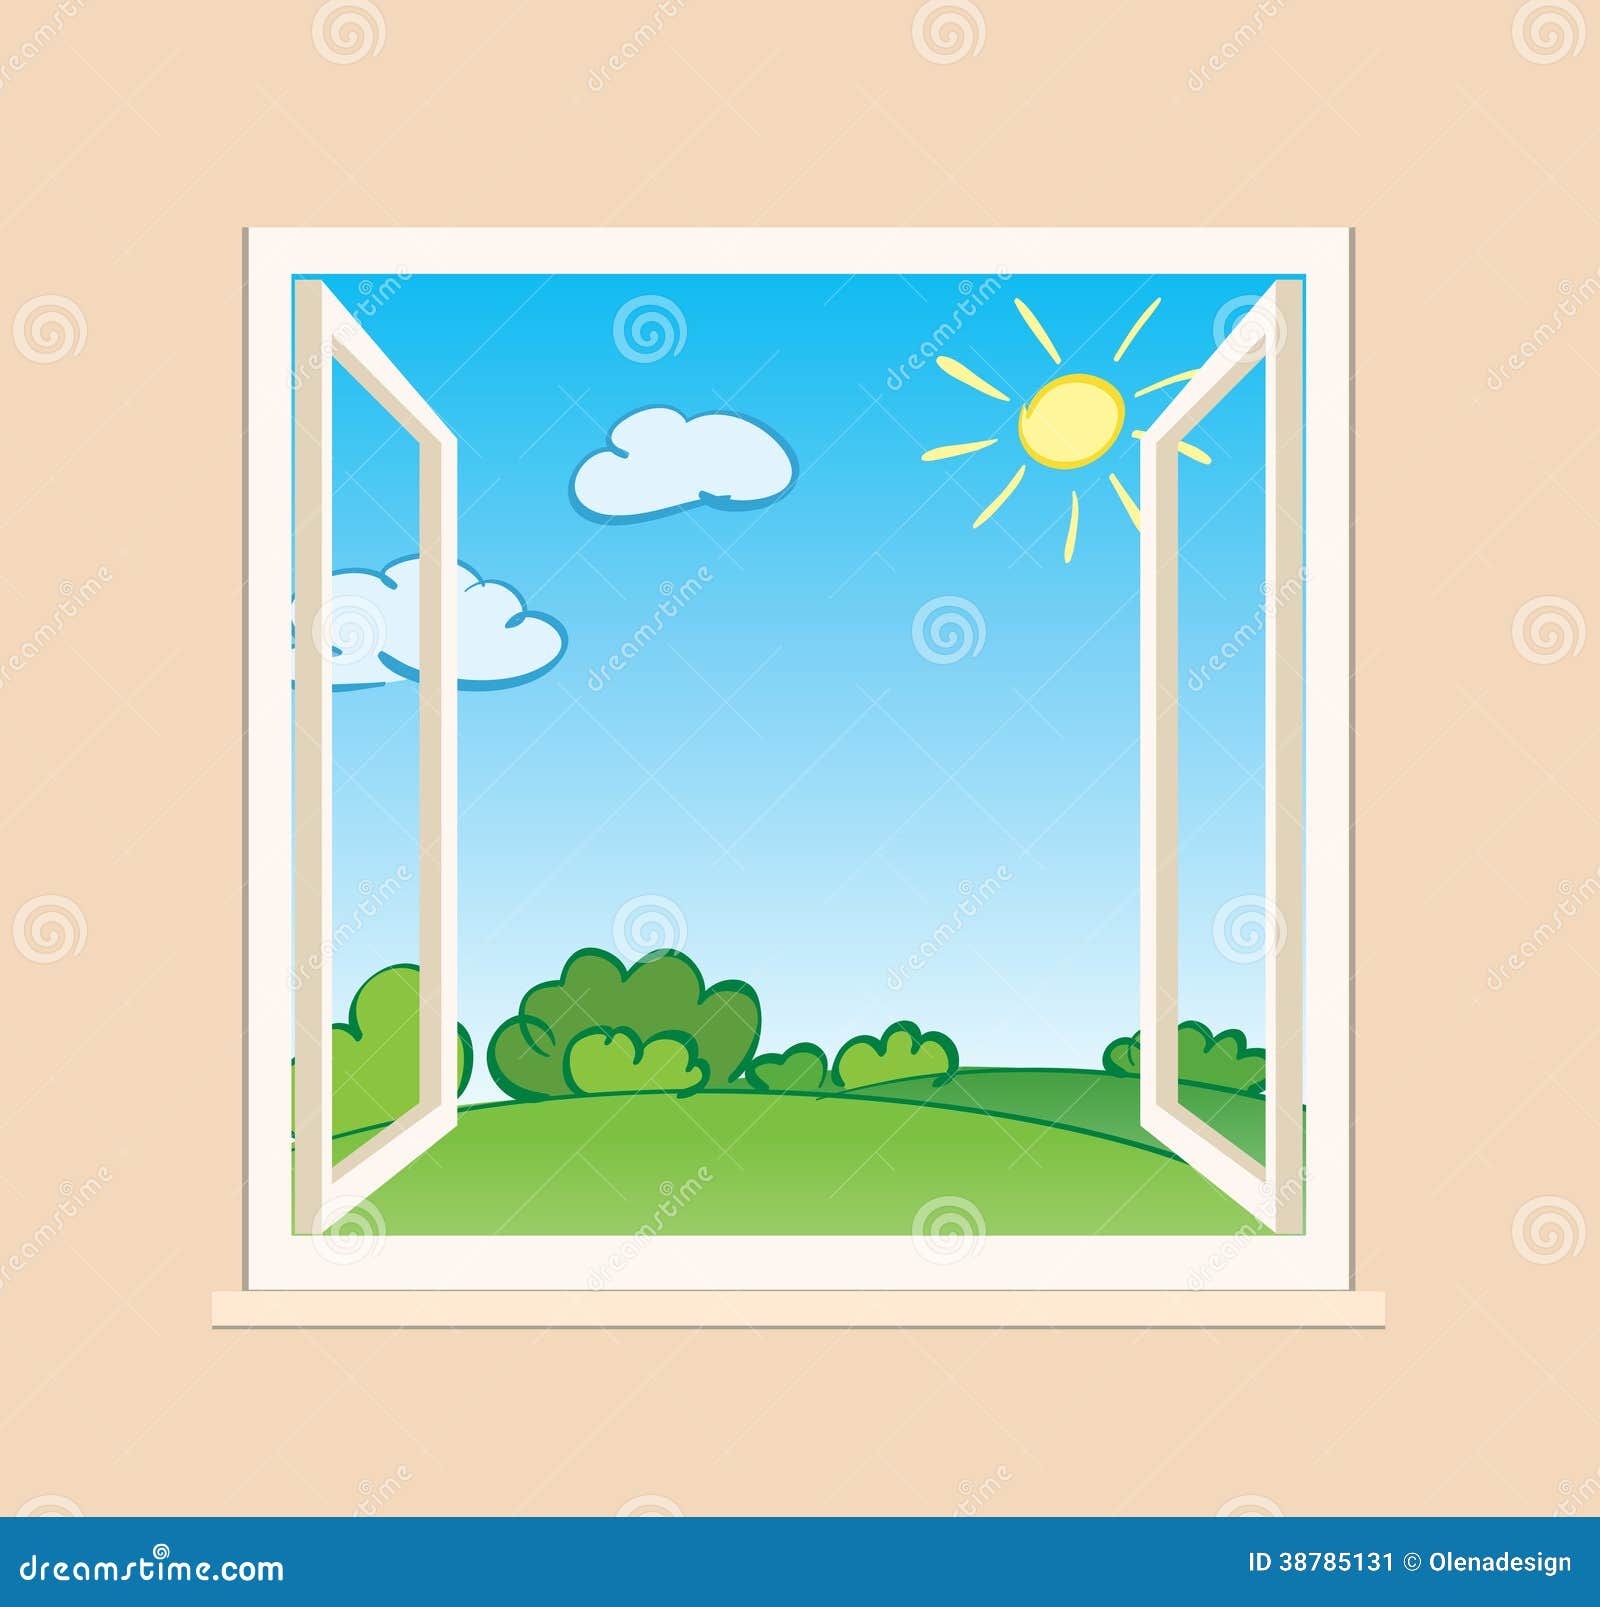 windows clip art animation - photo #48